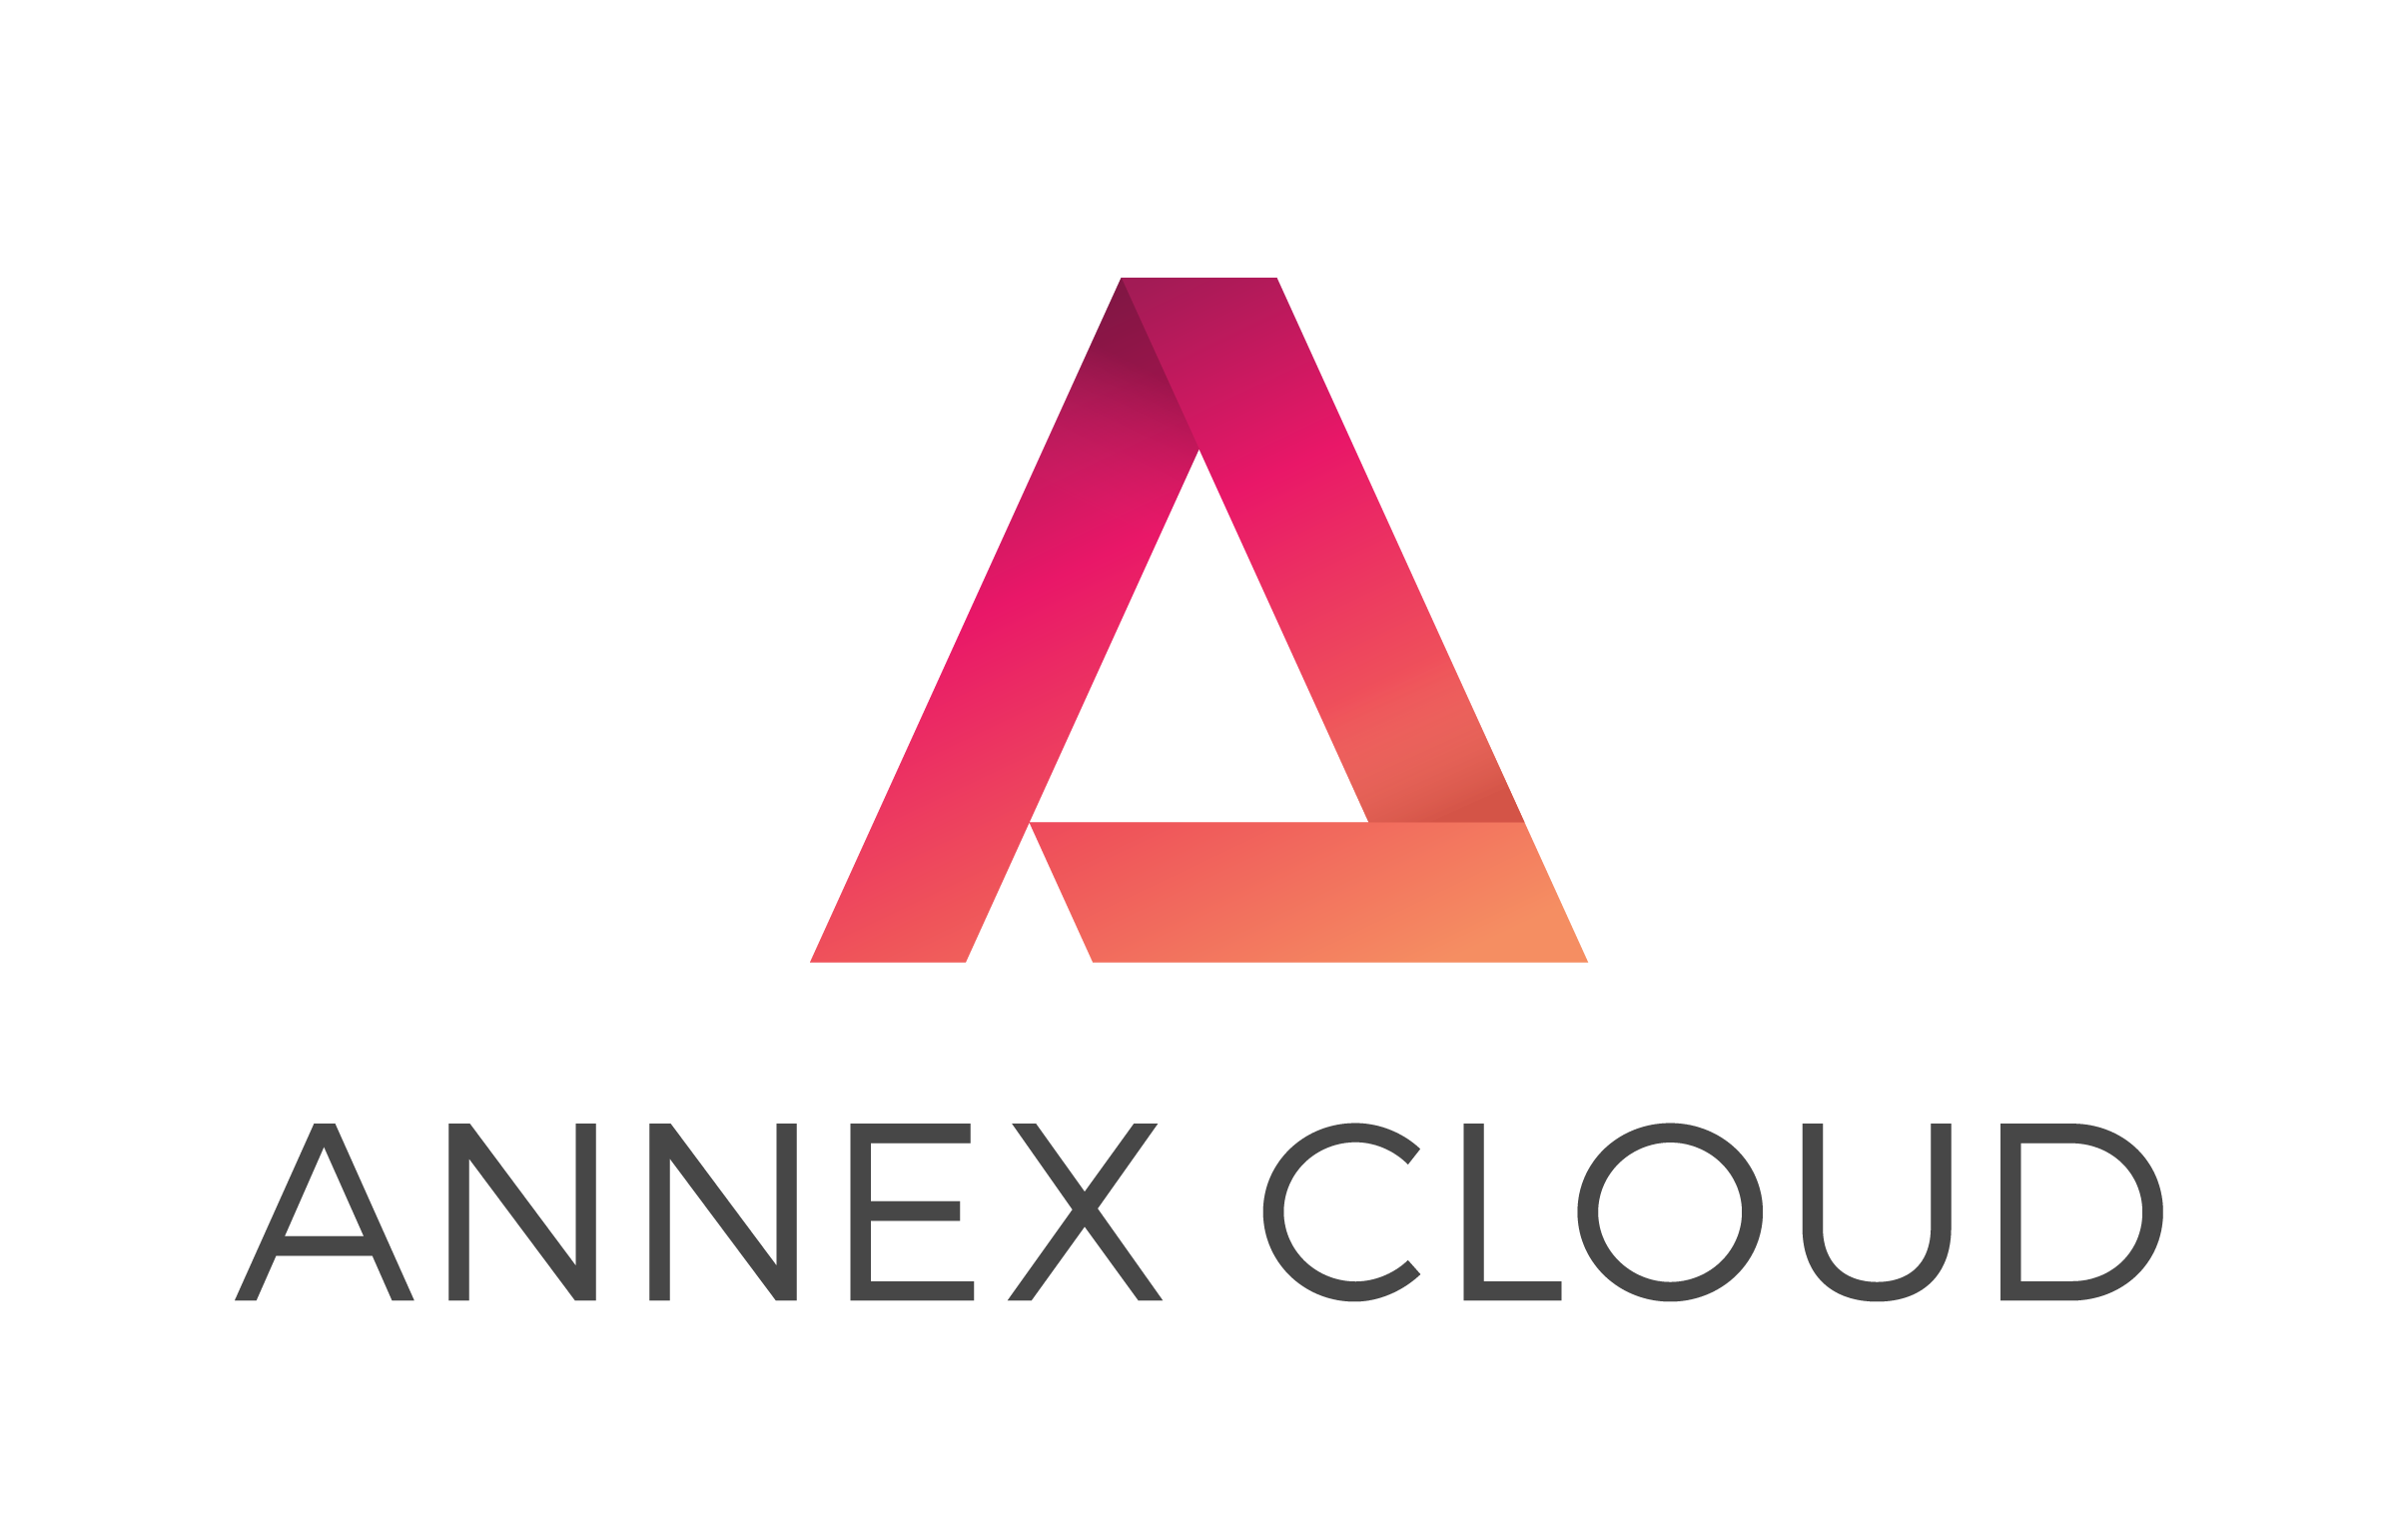 Annex Cloud - Crunchbase Company Profile & Funding